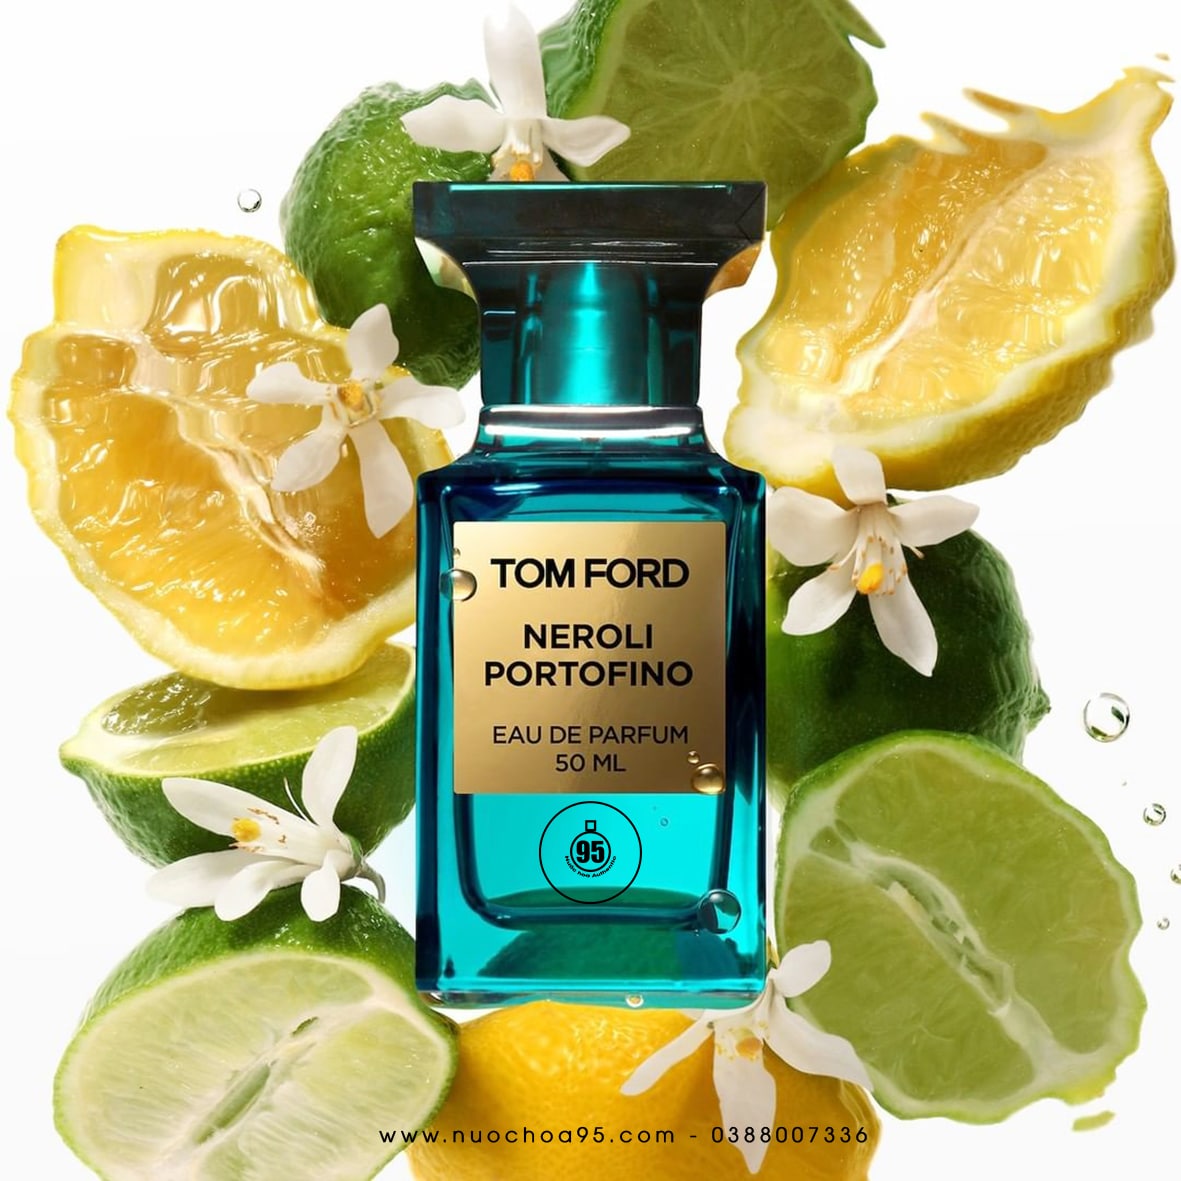 Nước hoa Tom Ford Neroli Portofino - Ảnh 2